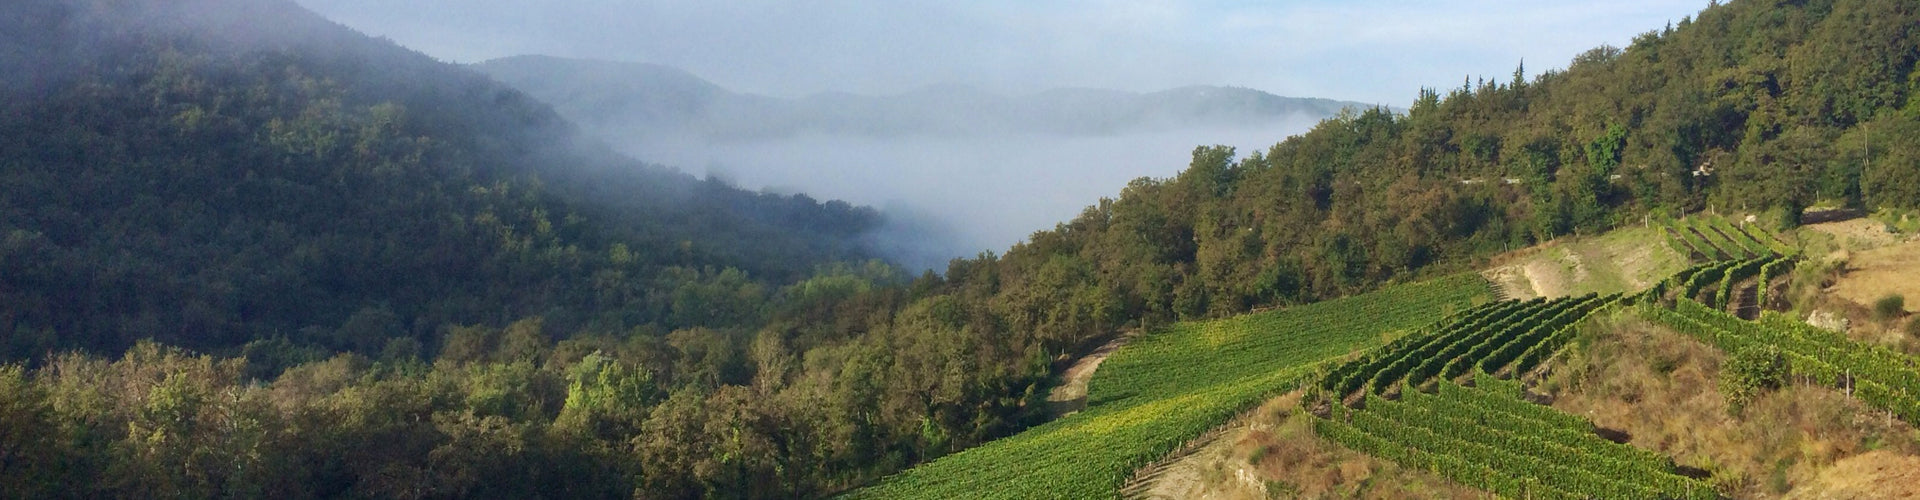 Monte Bernardi Vineyards in the hilly region of Panzano, Chianti Classico